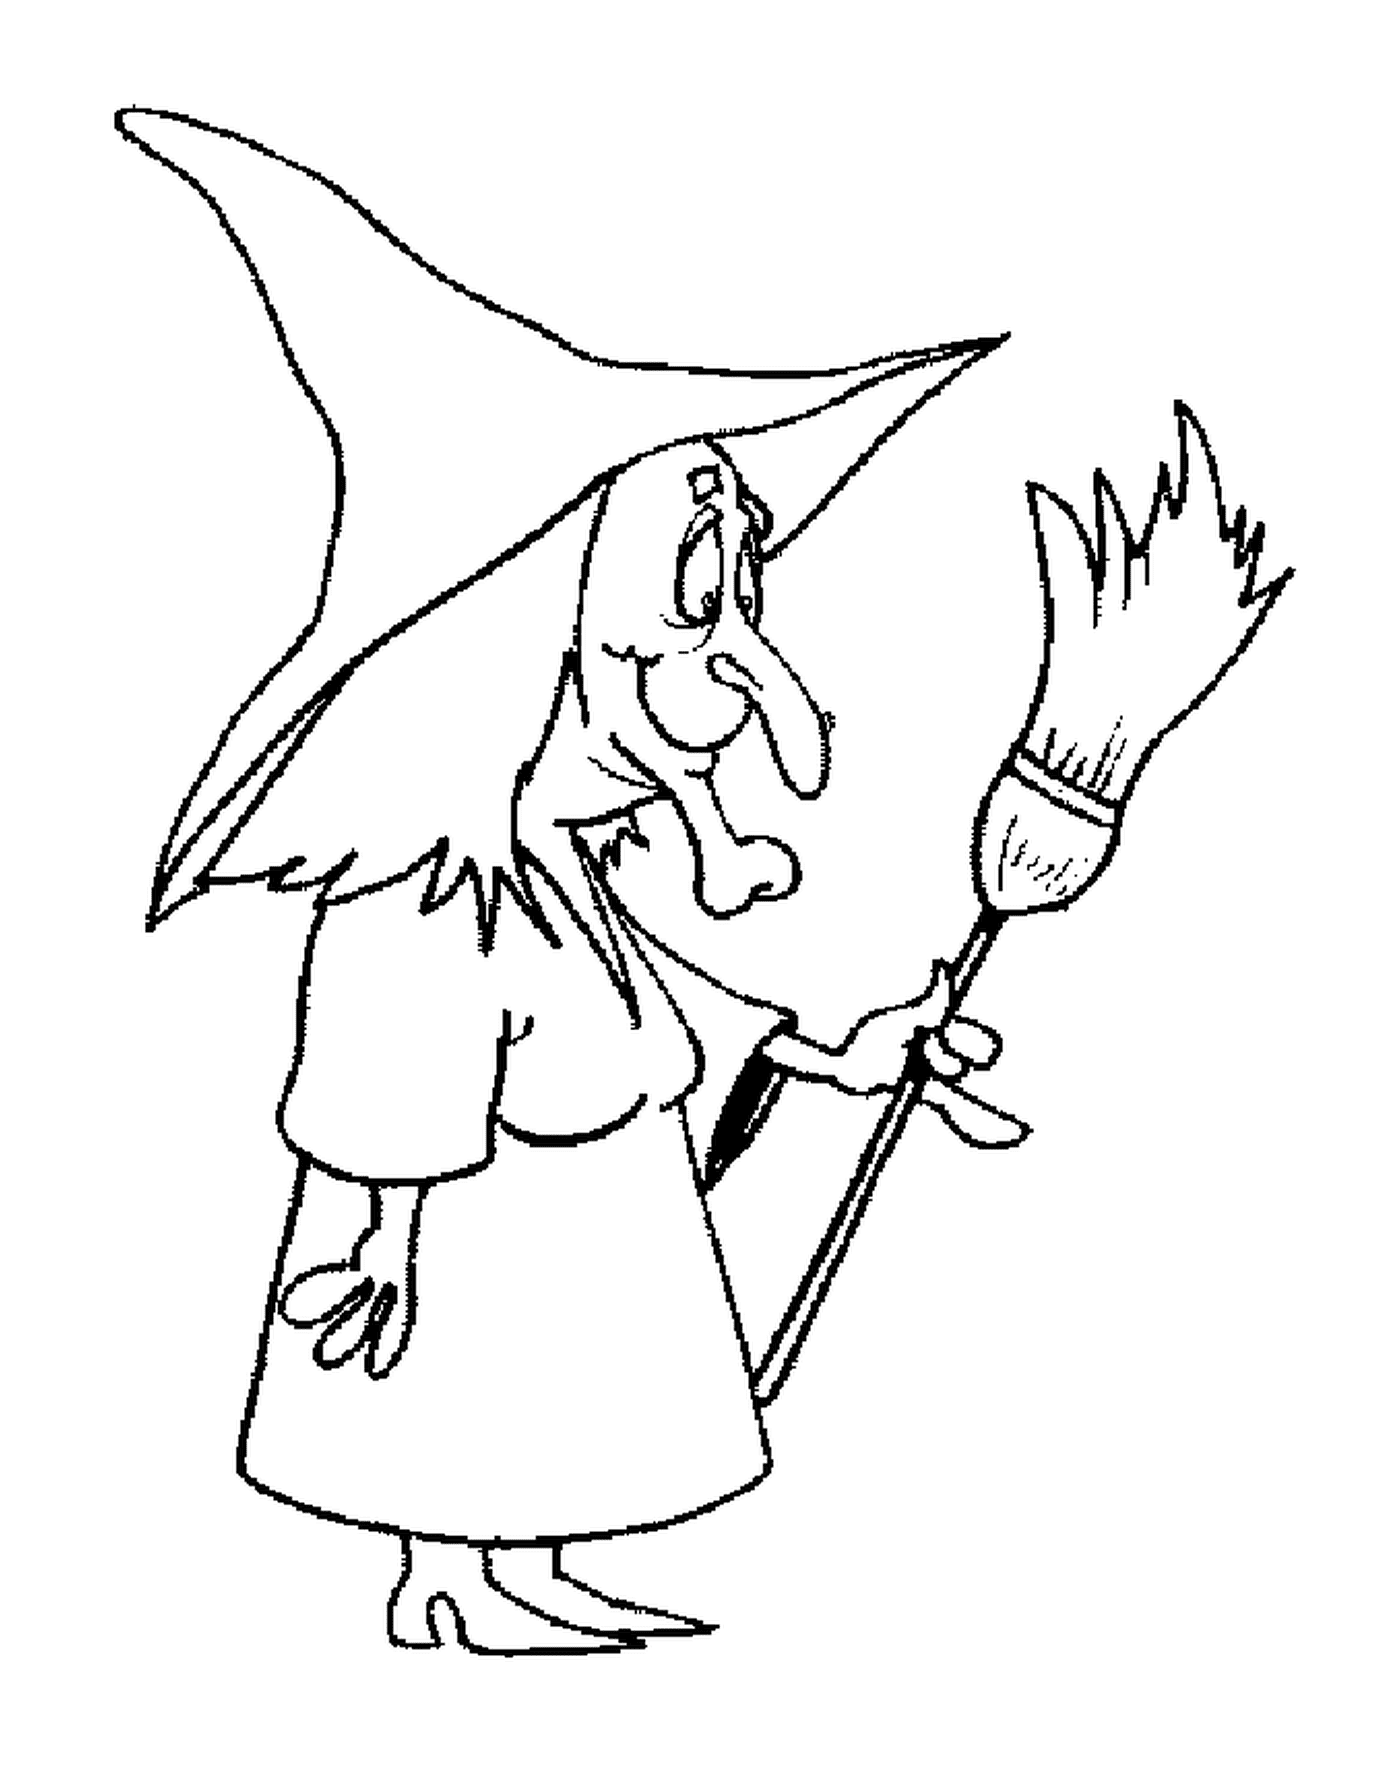  Hexe hält einen Besen 